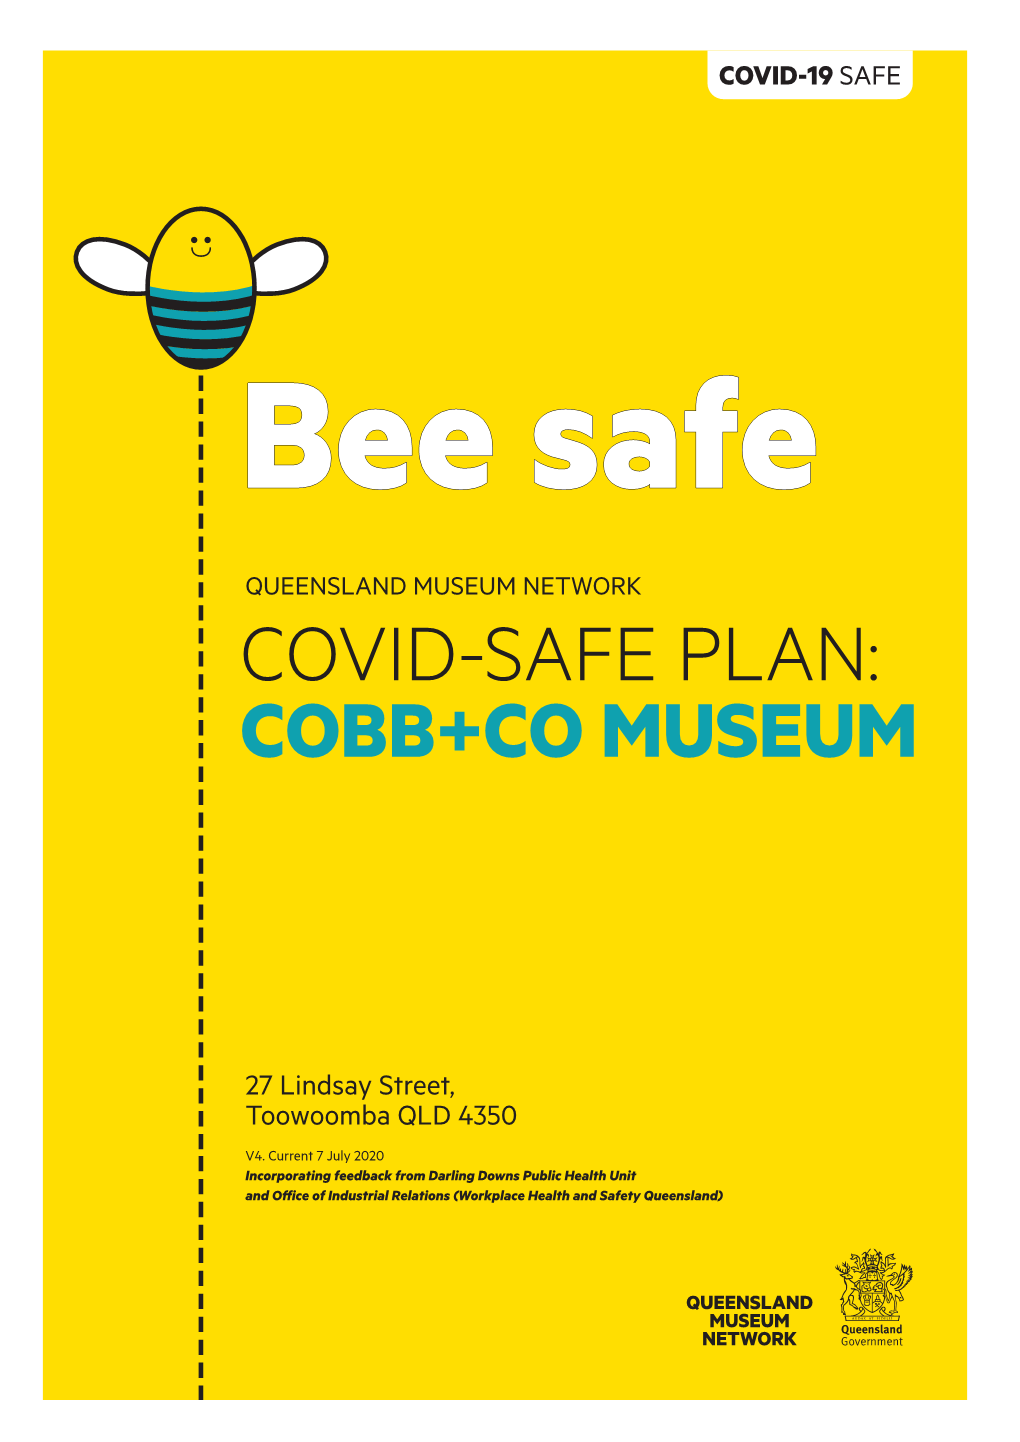 Covid-Safe Plan: Cobb+Co Museum